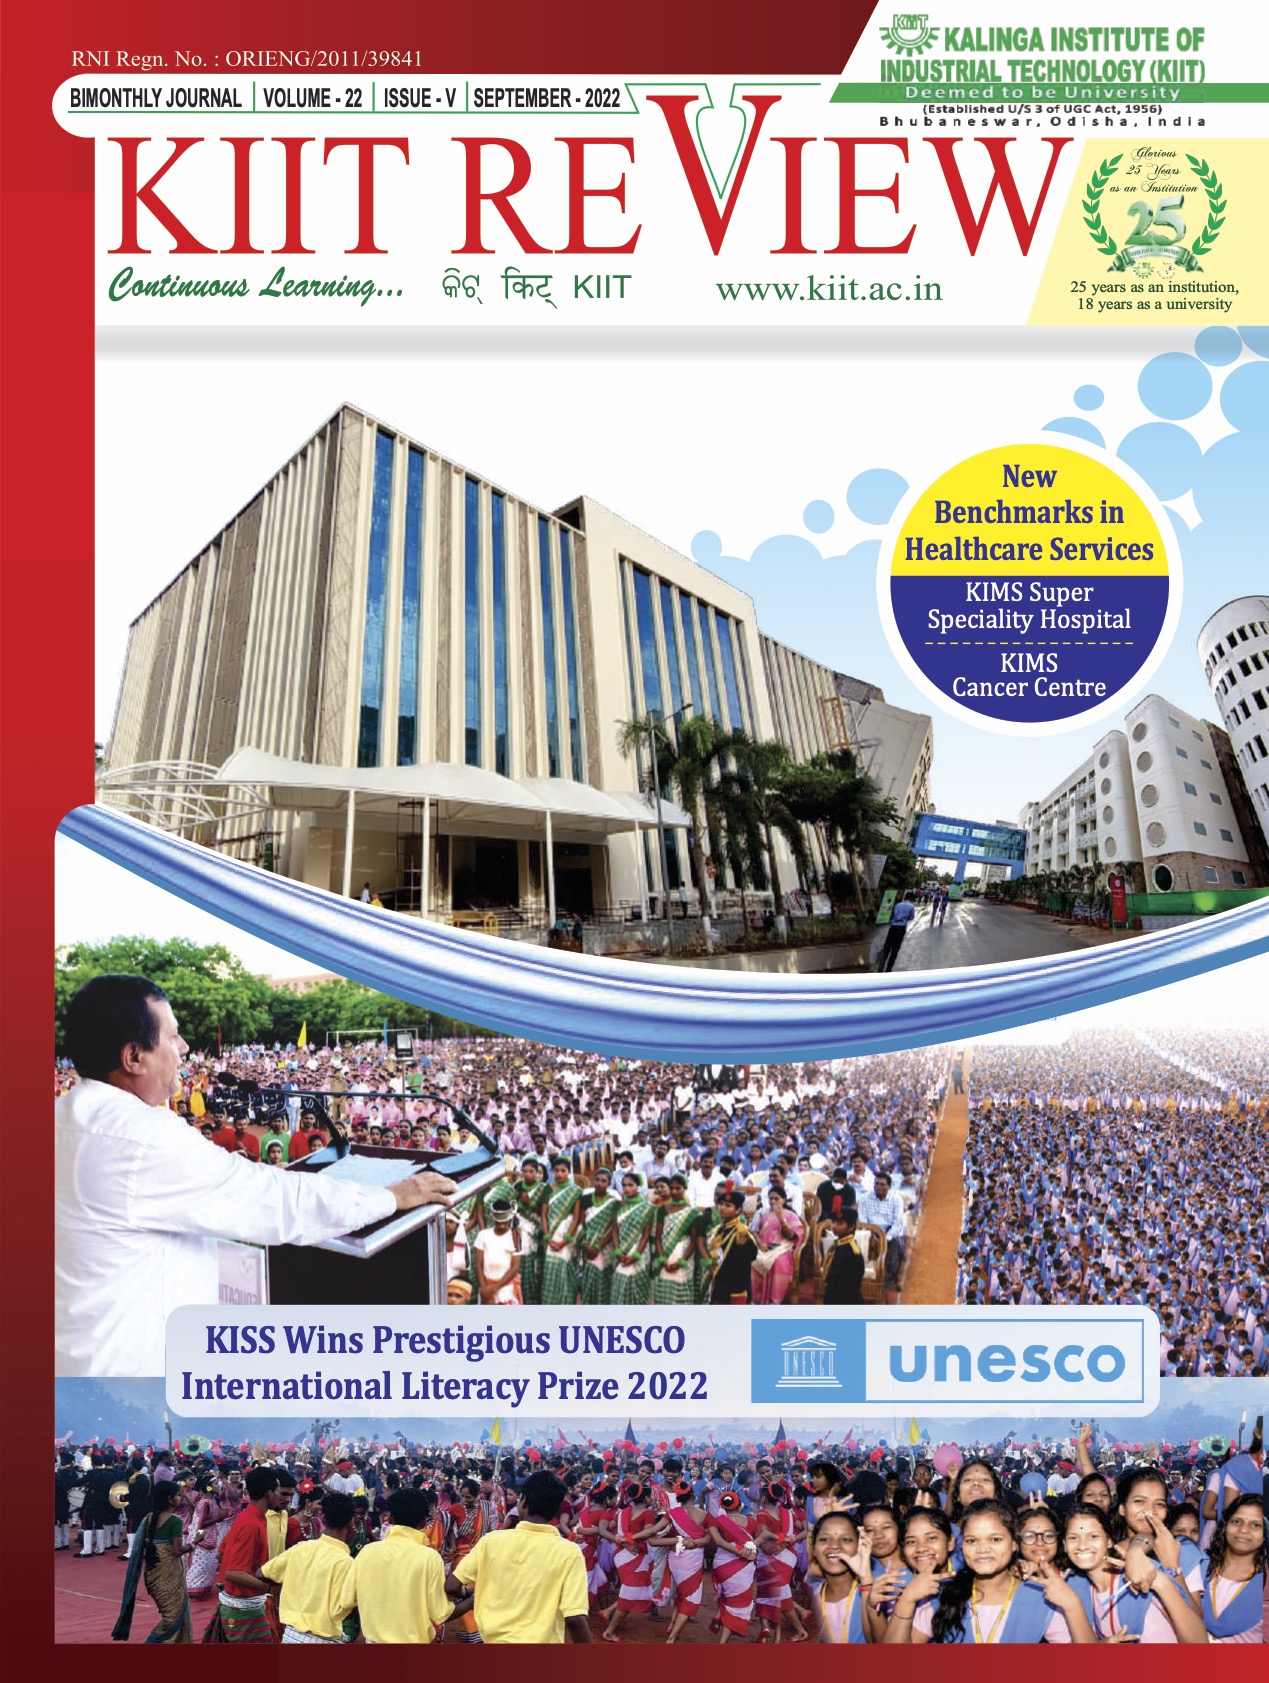 KIIT Review September 2022 Issue